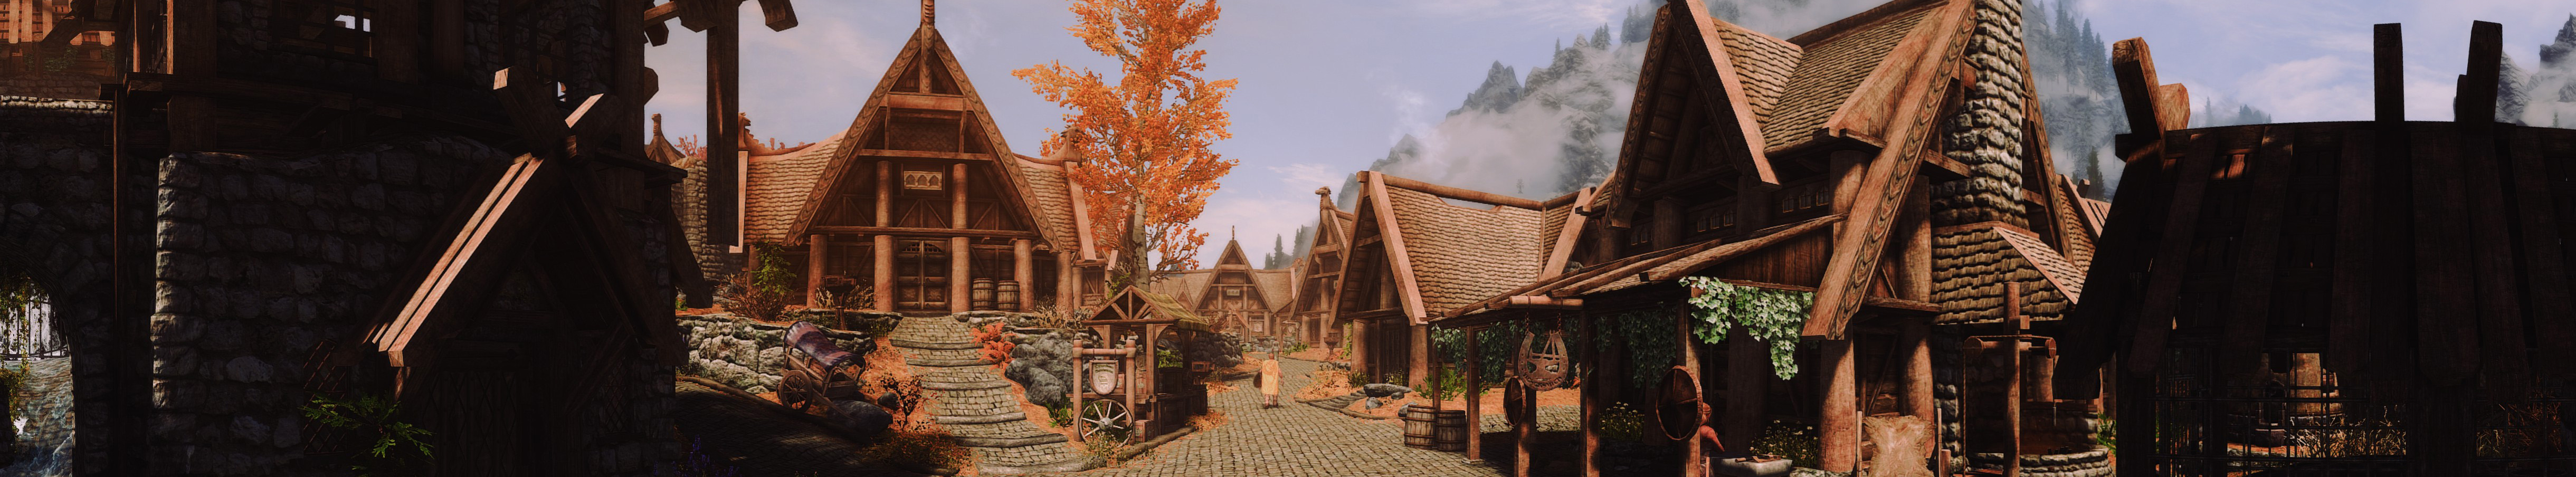 General 4881x904 The Elder Scrolls V: Skyrim graphics card screen shot RPG video games Whiterun fantasy town fantasy city PC gaming